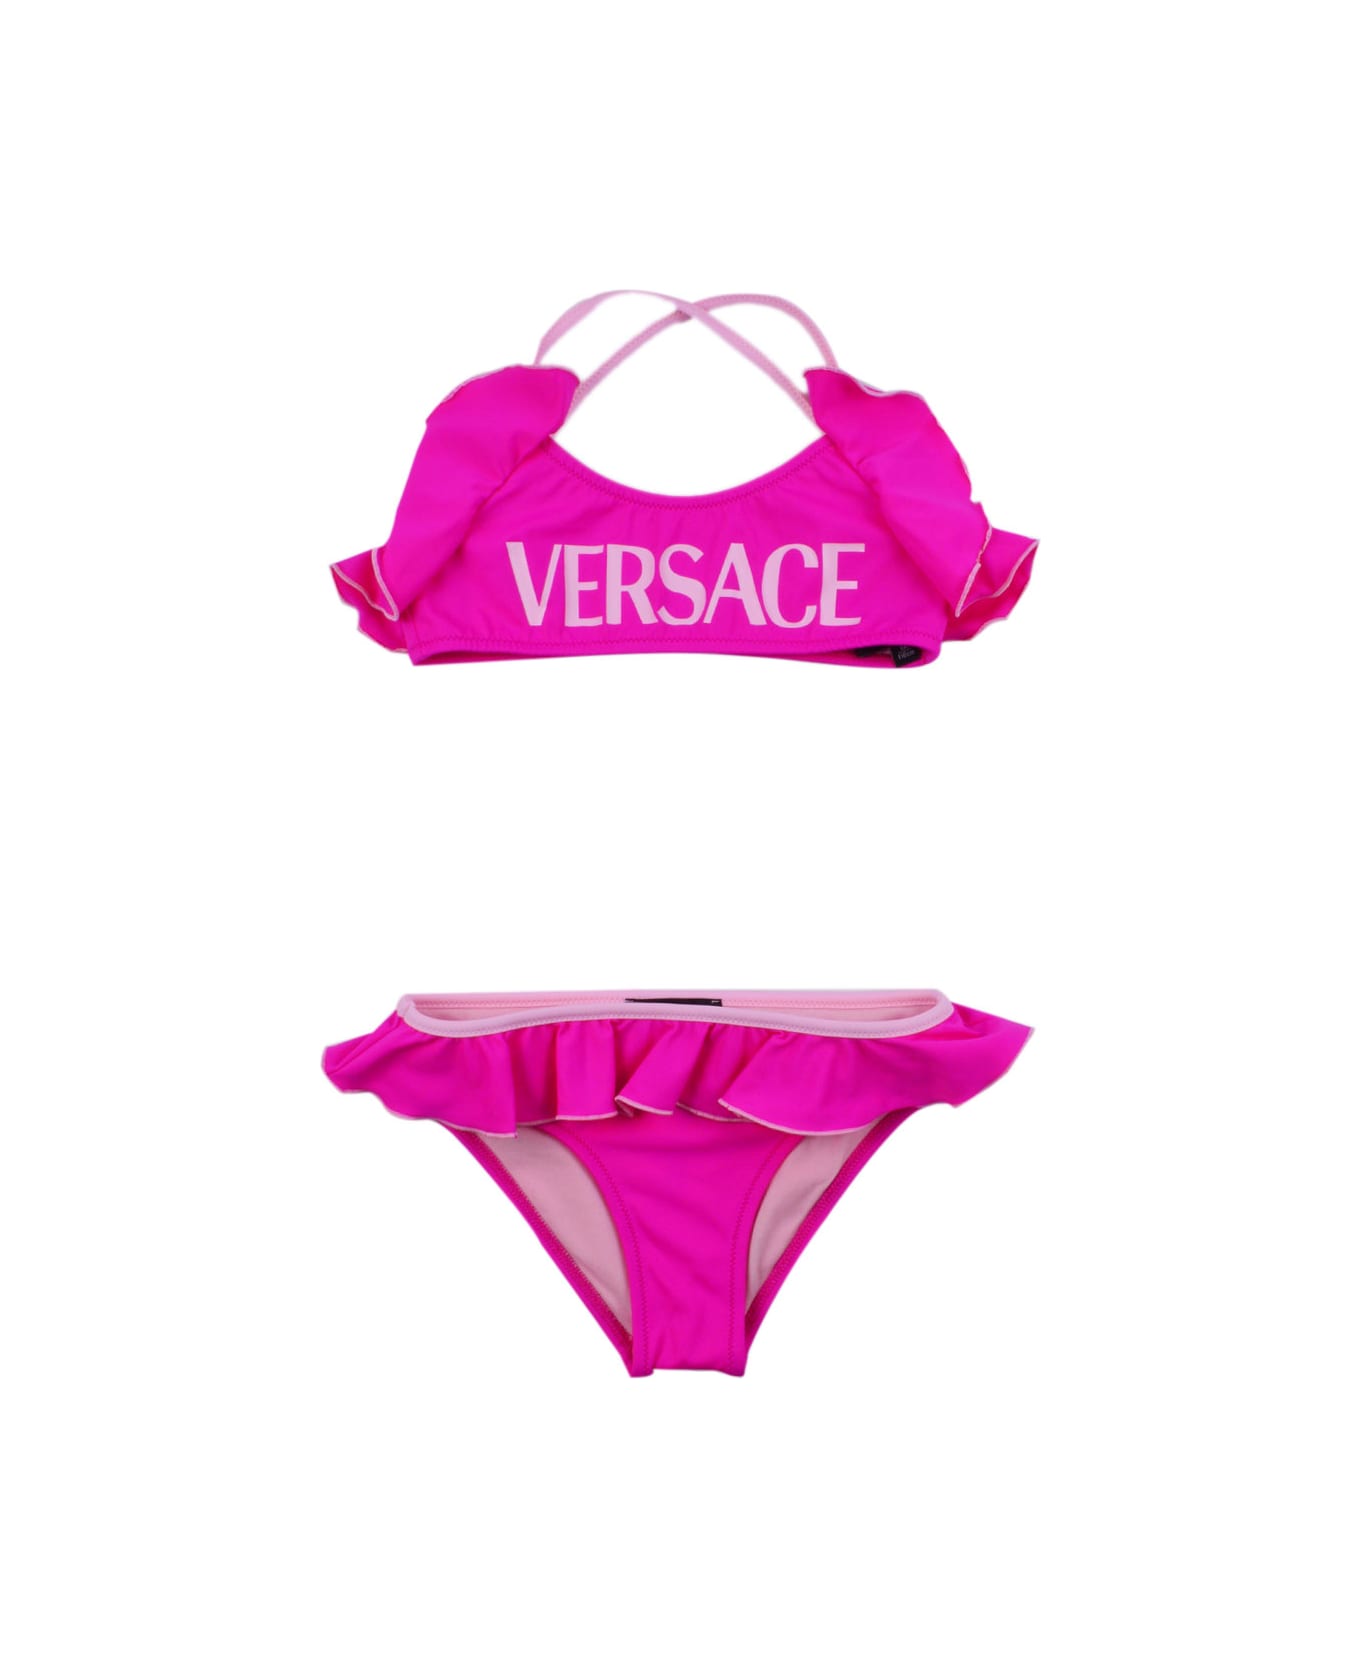 Versace Bikini With Versace Print - Rose